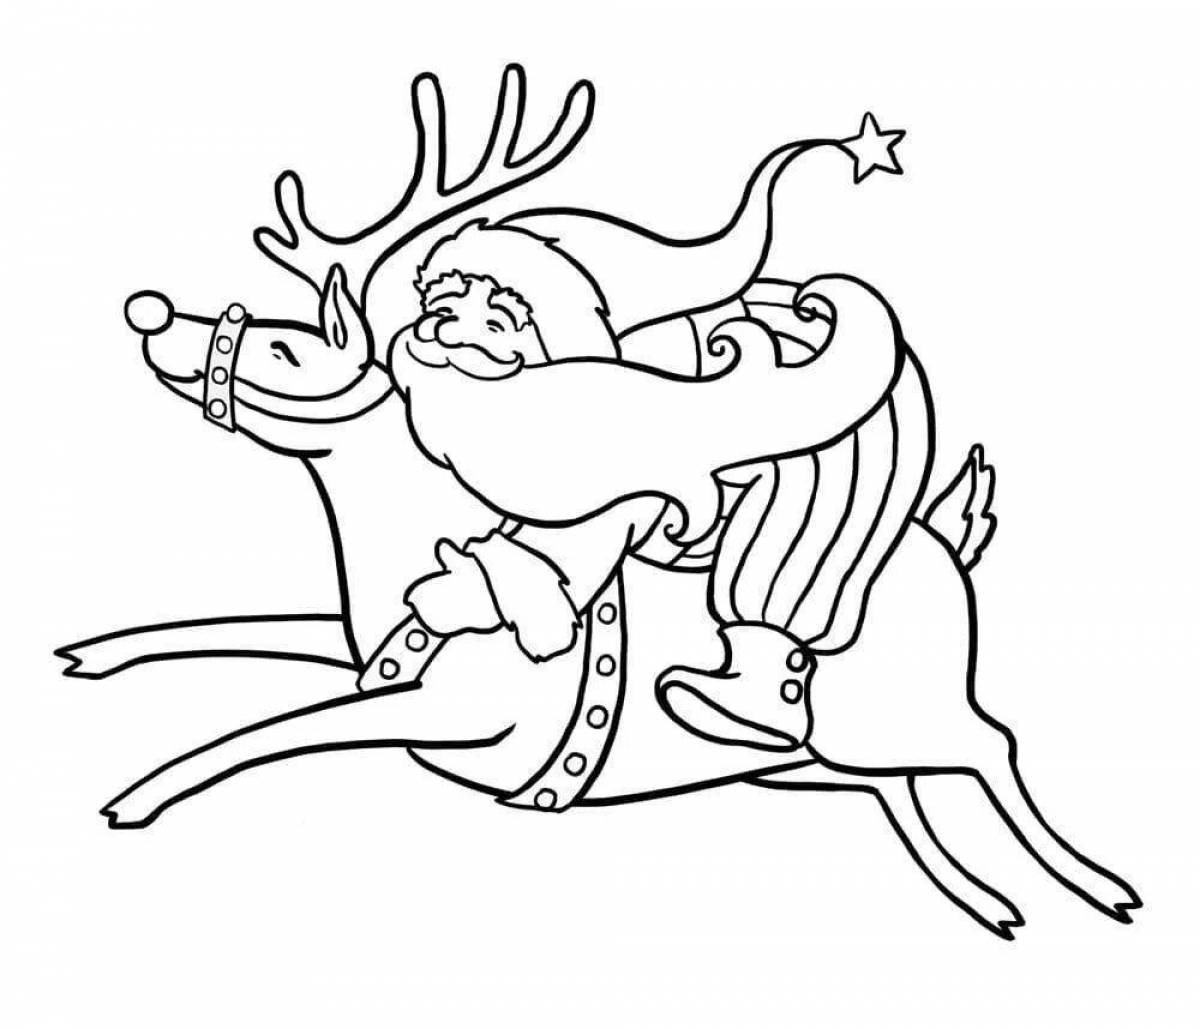 Fancy santa claus and reindeer coloring book